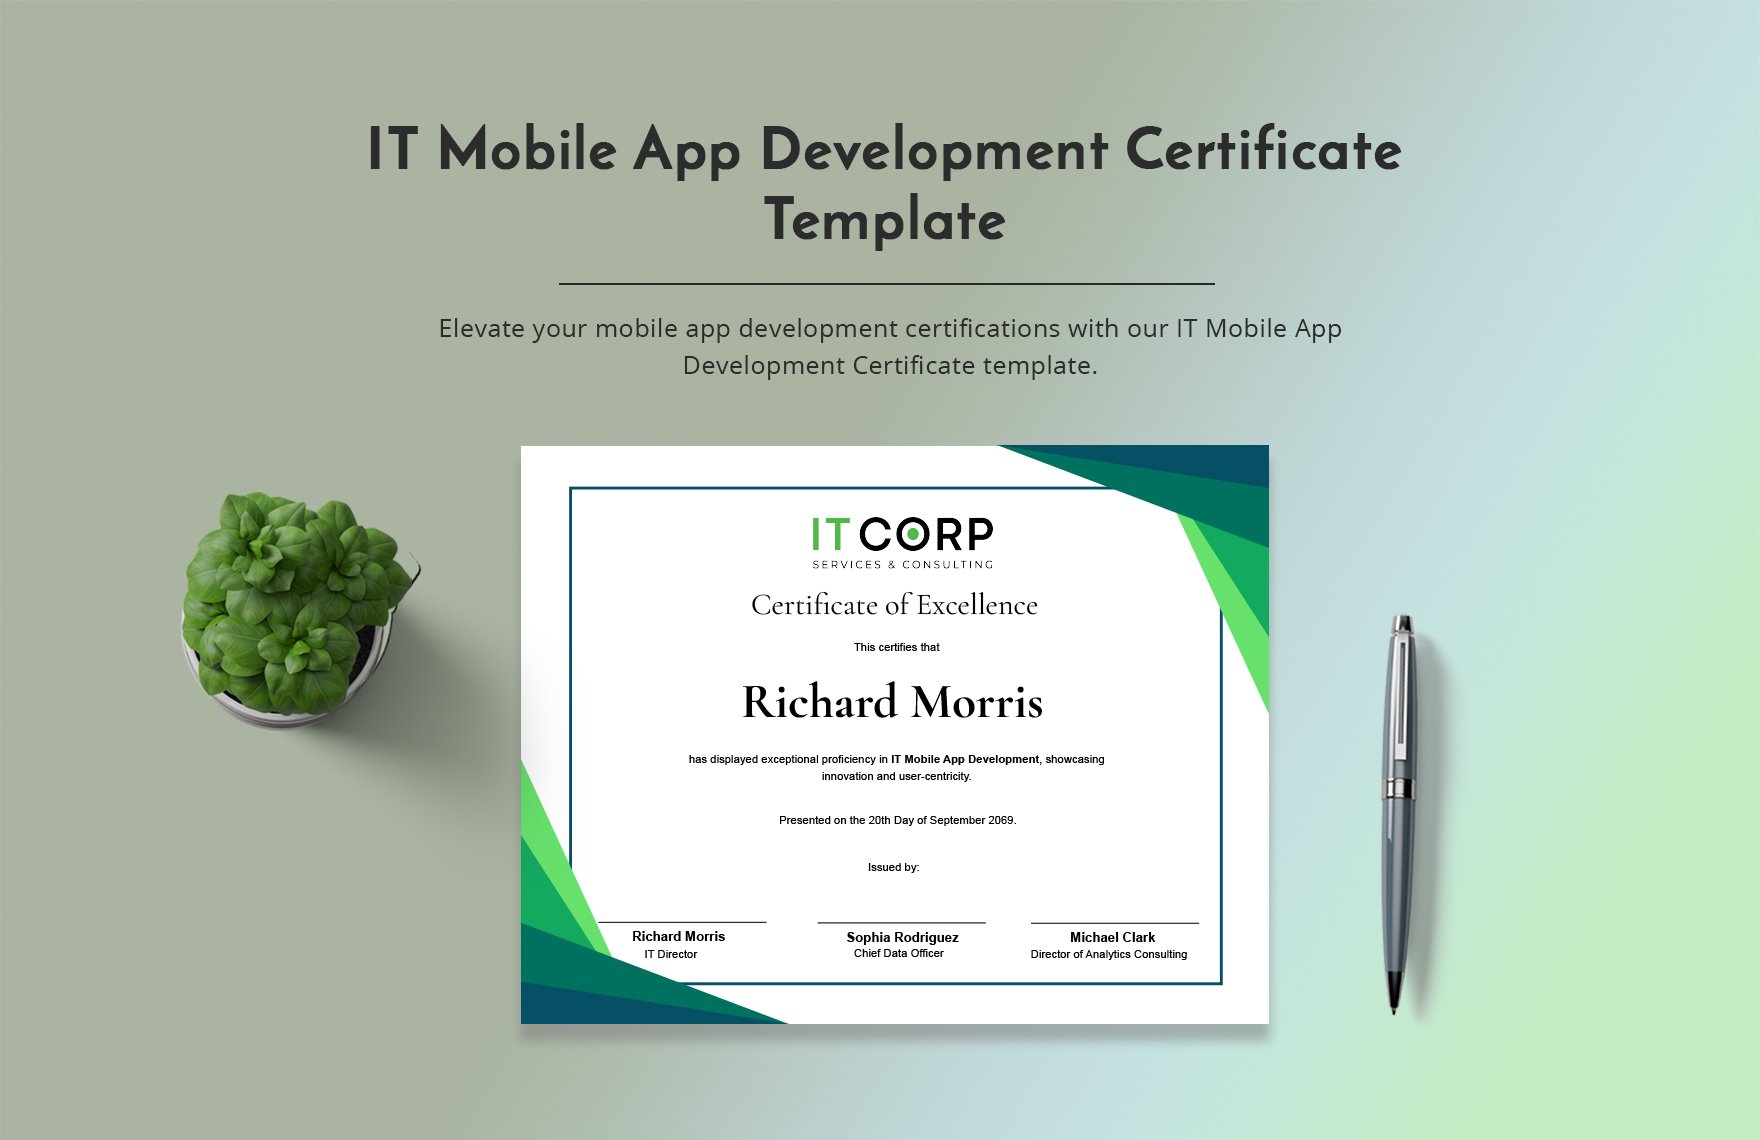 IT Mobile App Development Certificate Template